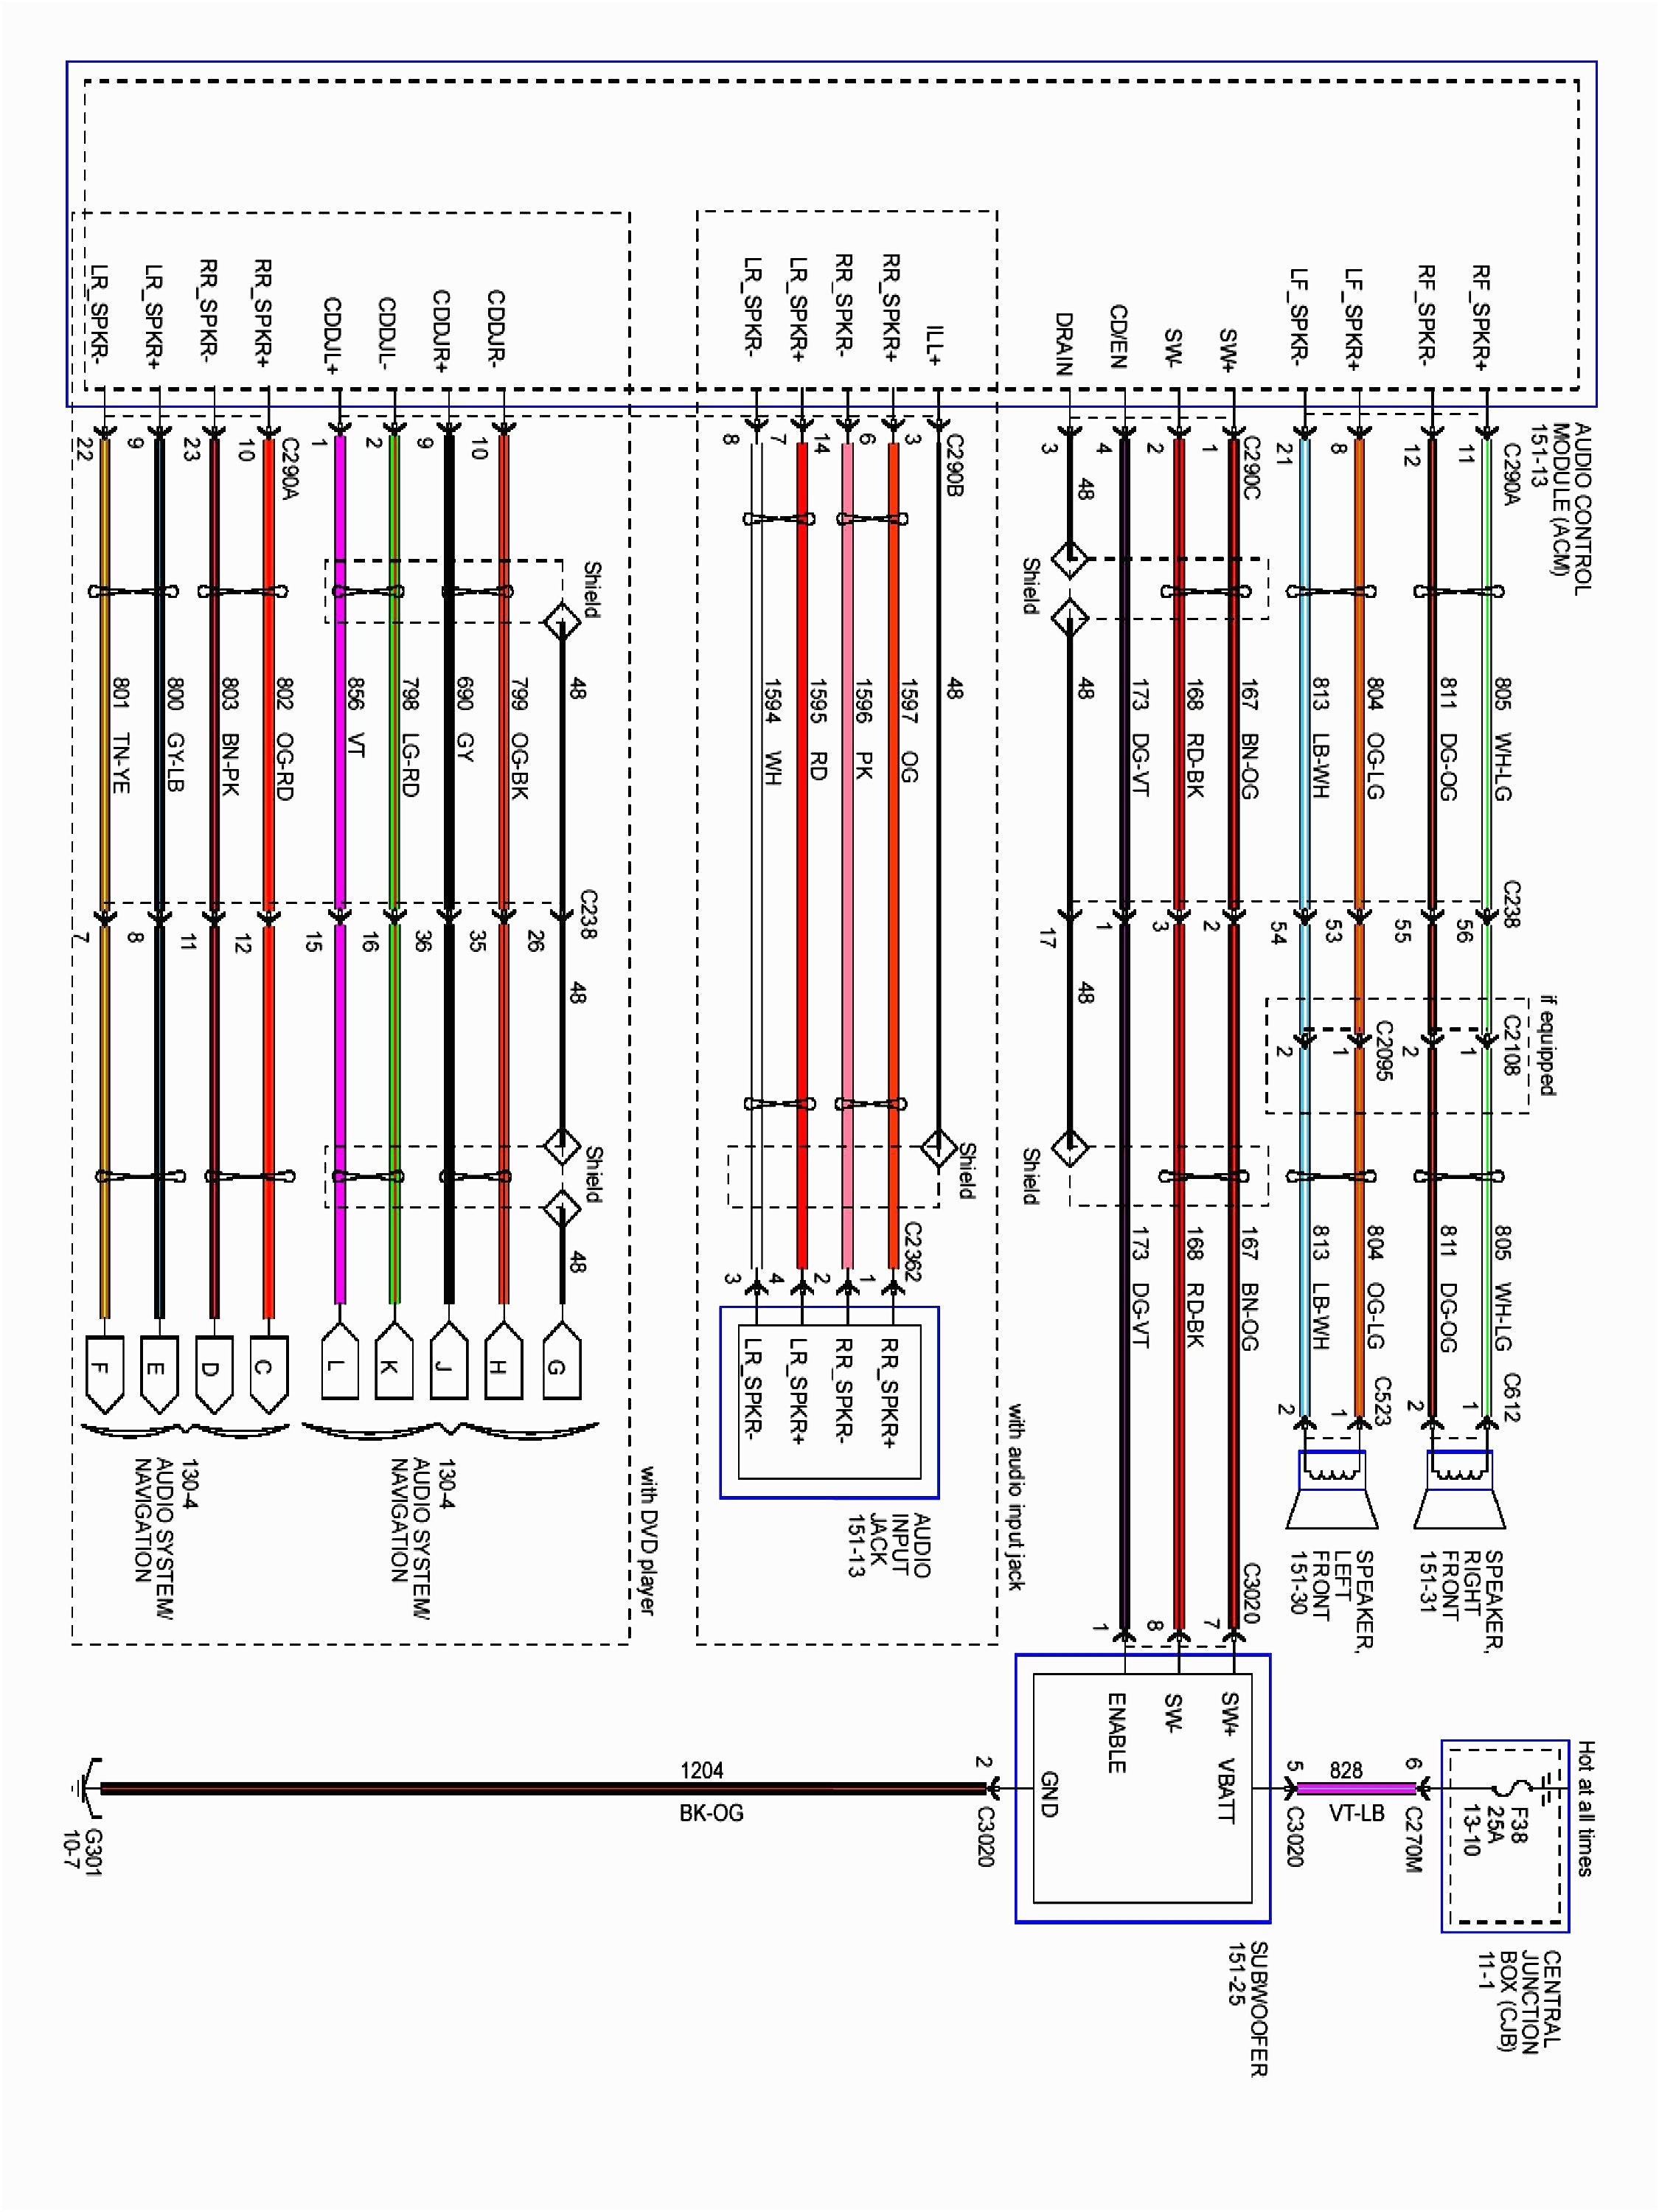 abs wiring harness diagram wiring diagram sort 2004 pontiac grand prix abs wiring harness diagram abs wiring harness diagram